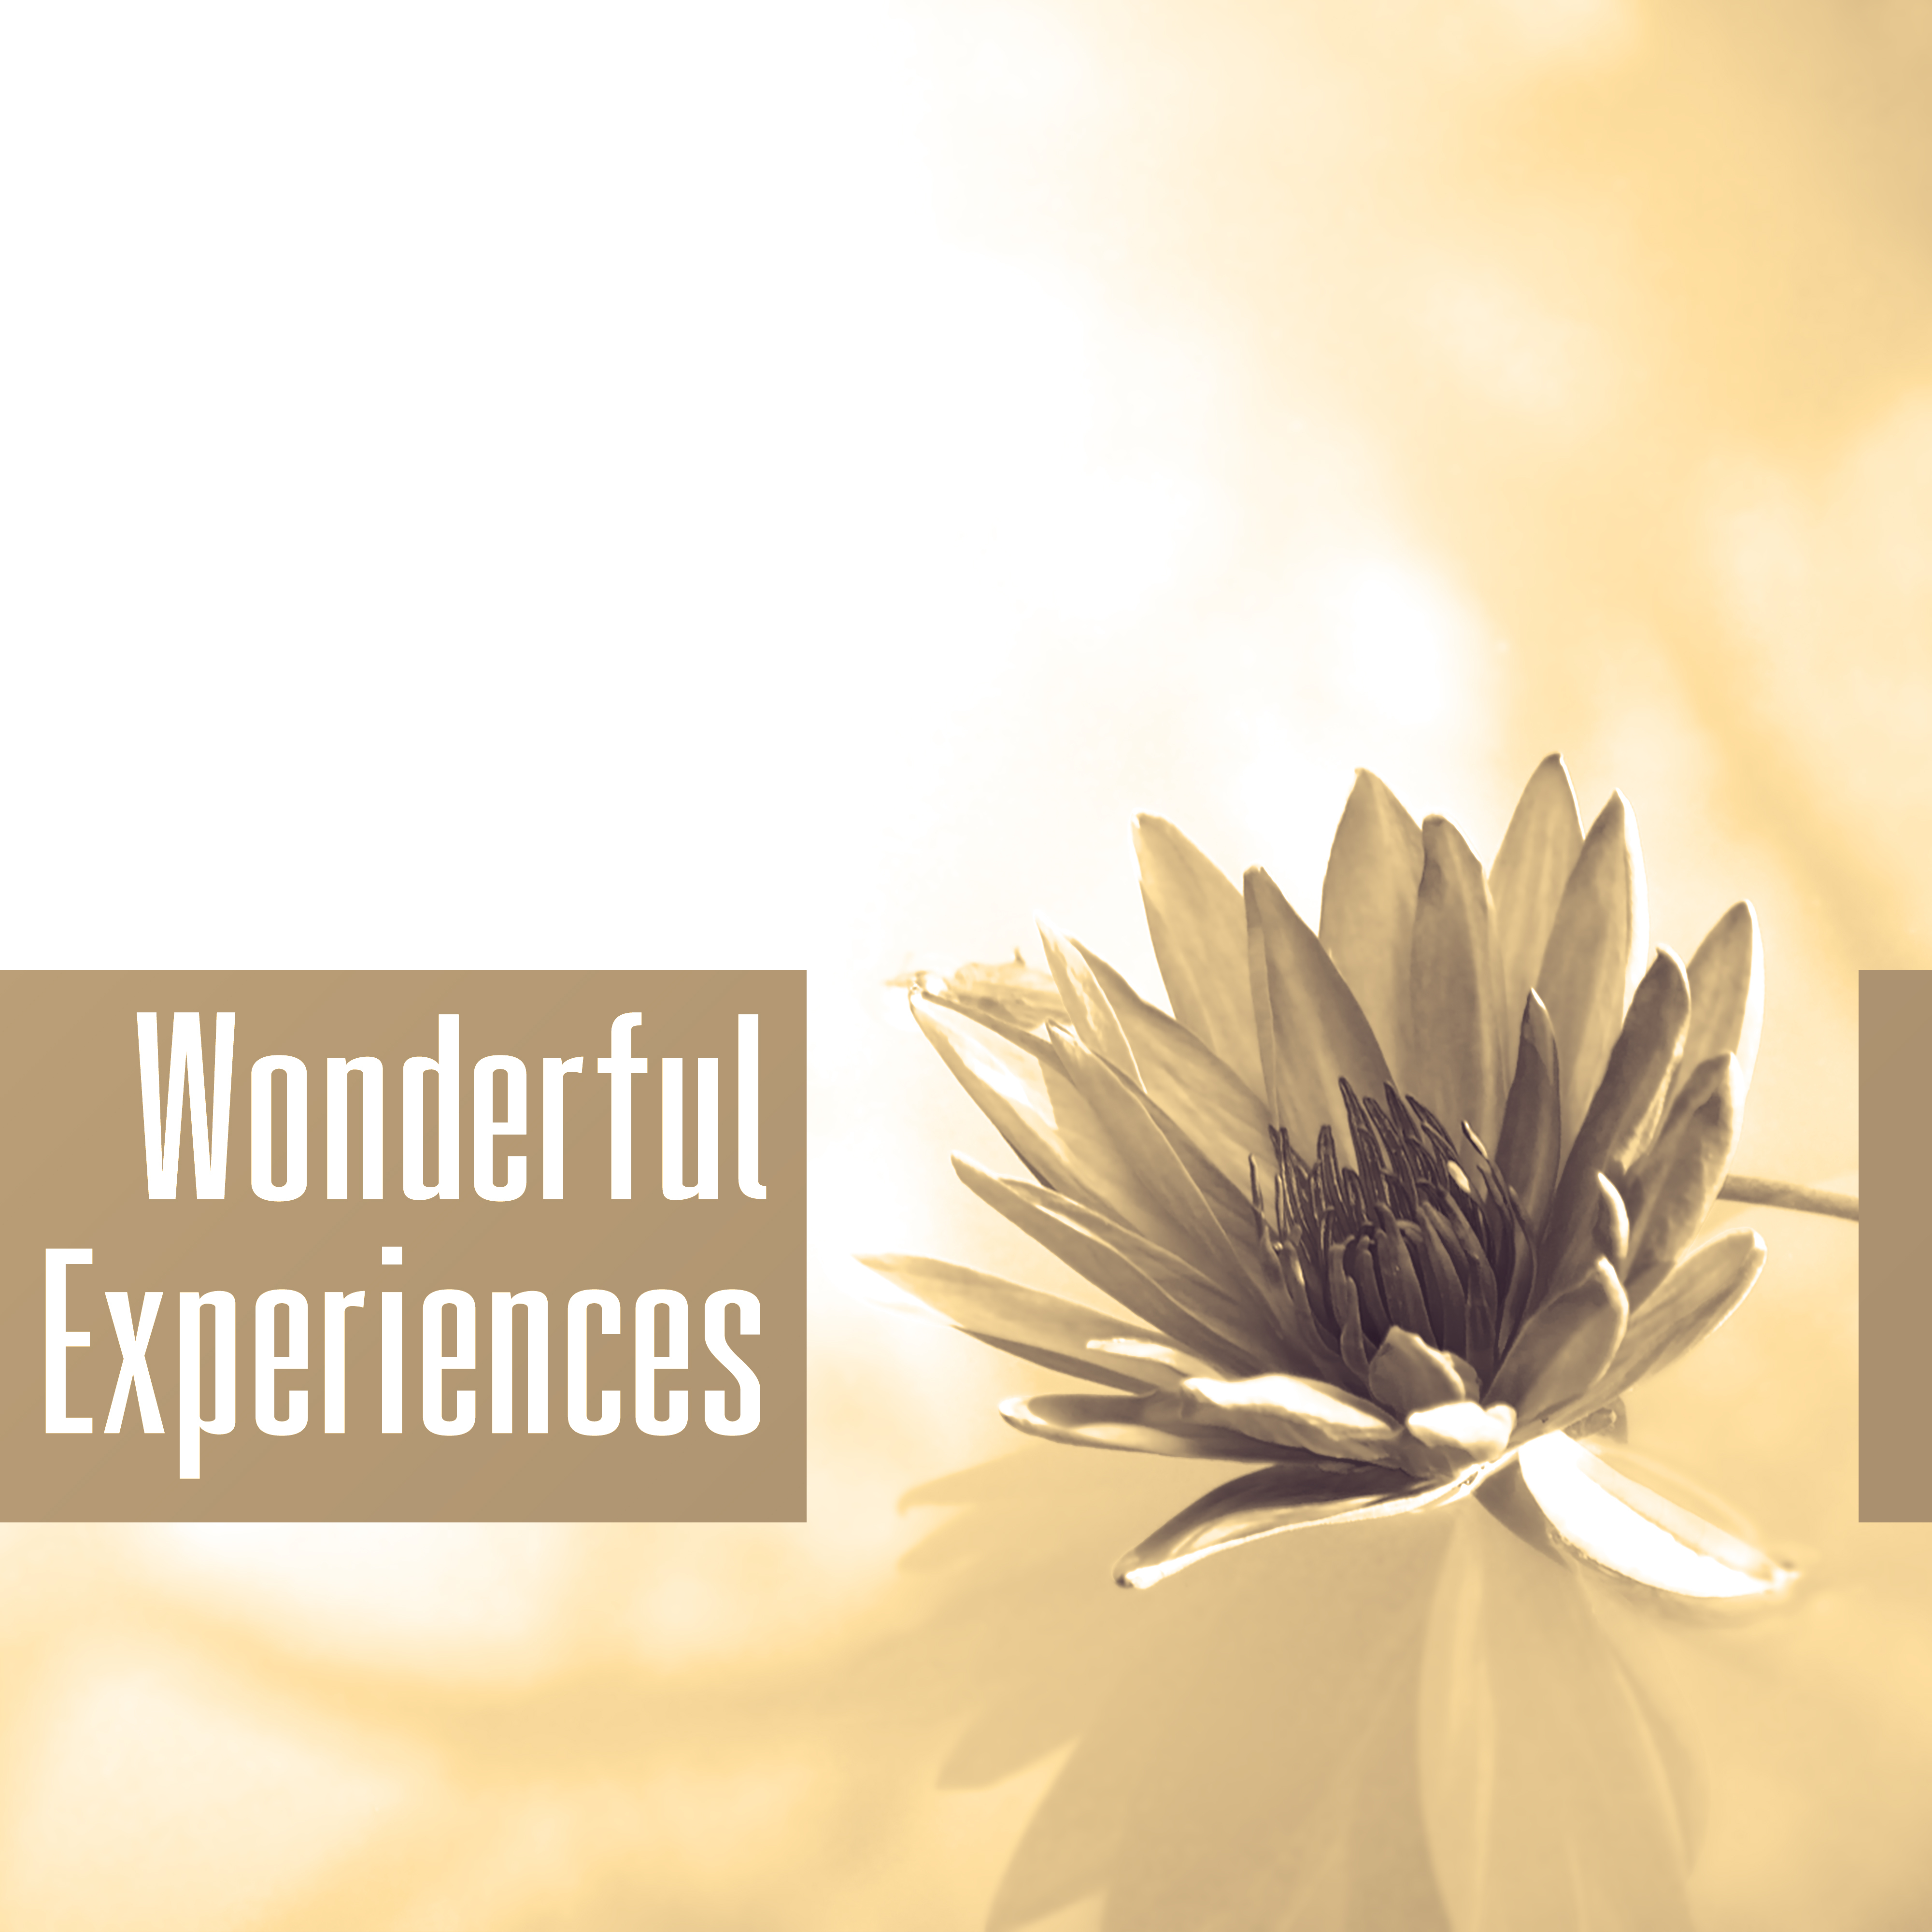 Wonderful Experiences – Gentle Massage, Nice Touch, Surrounding Nature